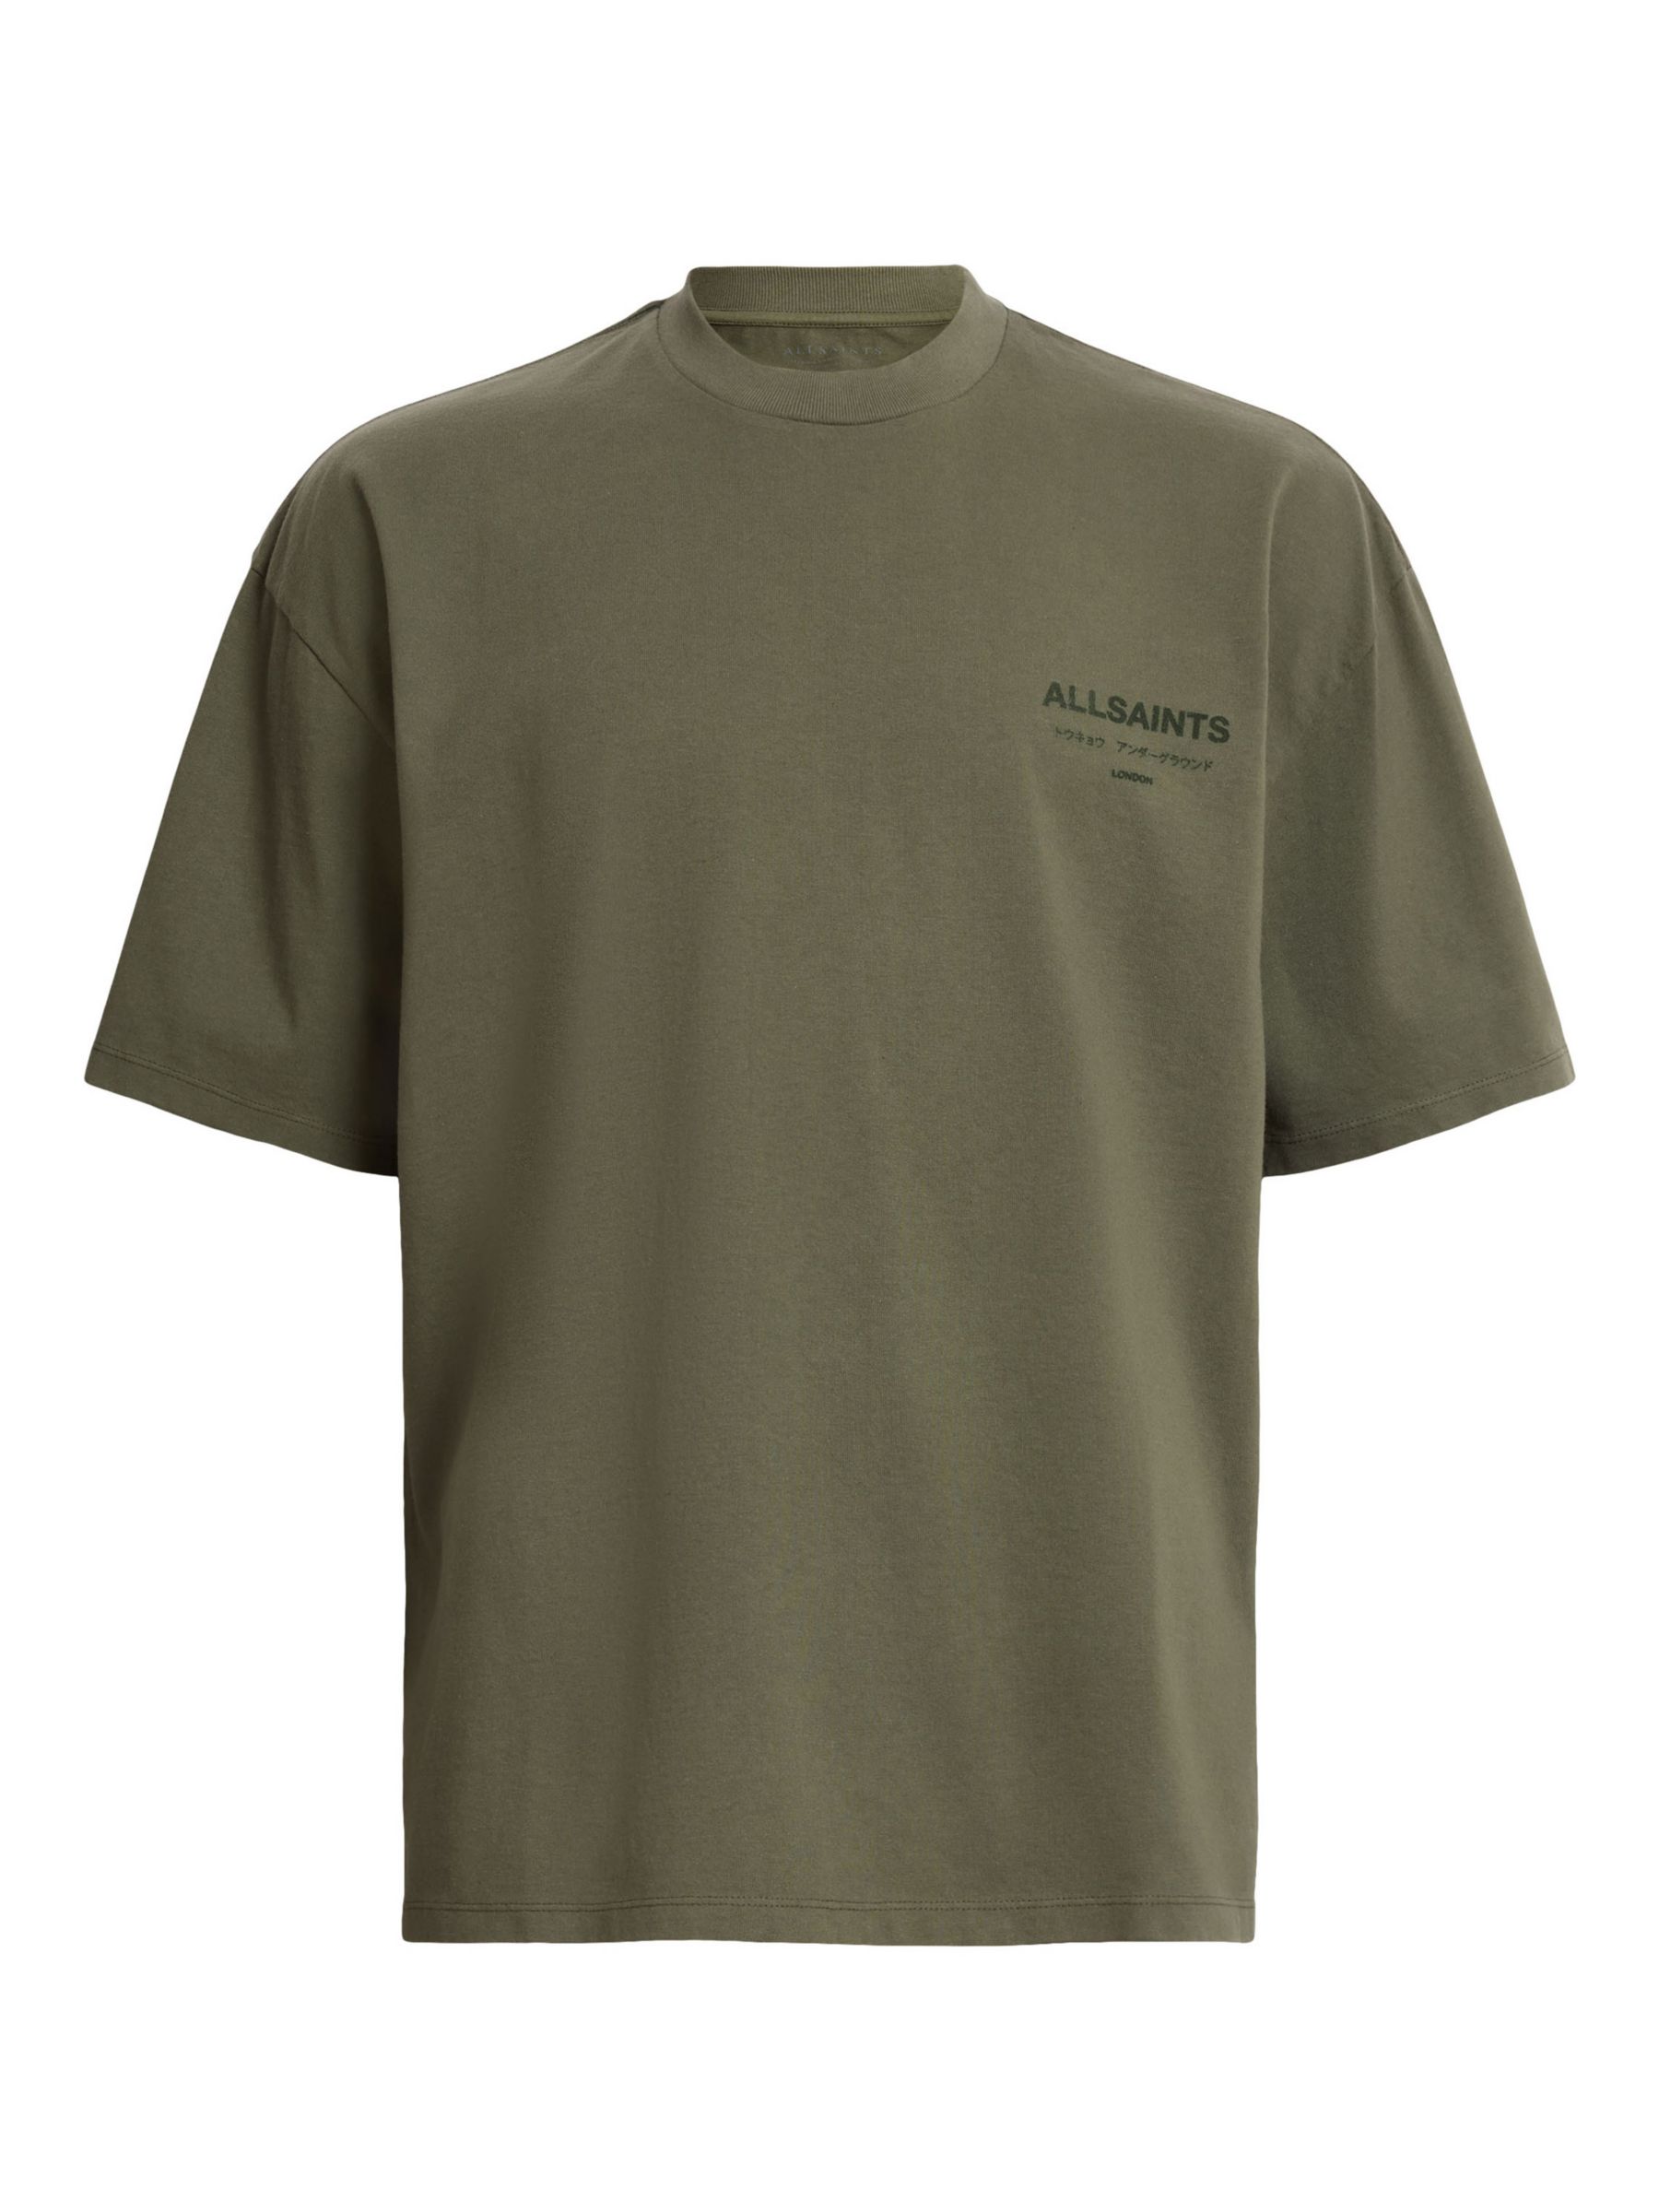 AllSaints Xander Short Sleeve Crew T-Shirt, Green, M